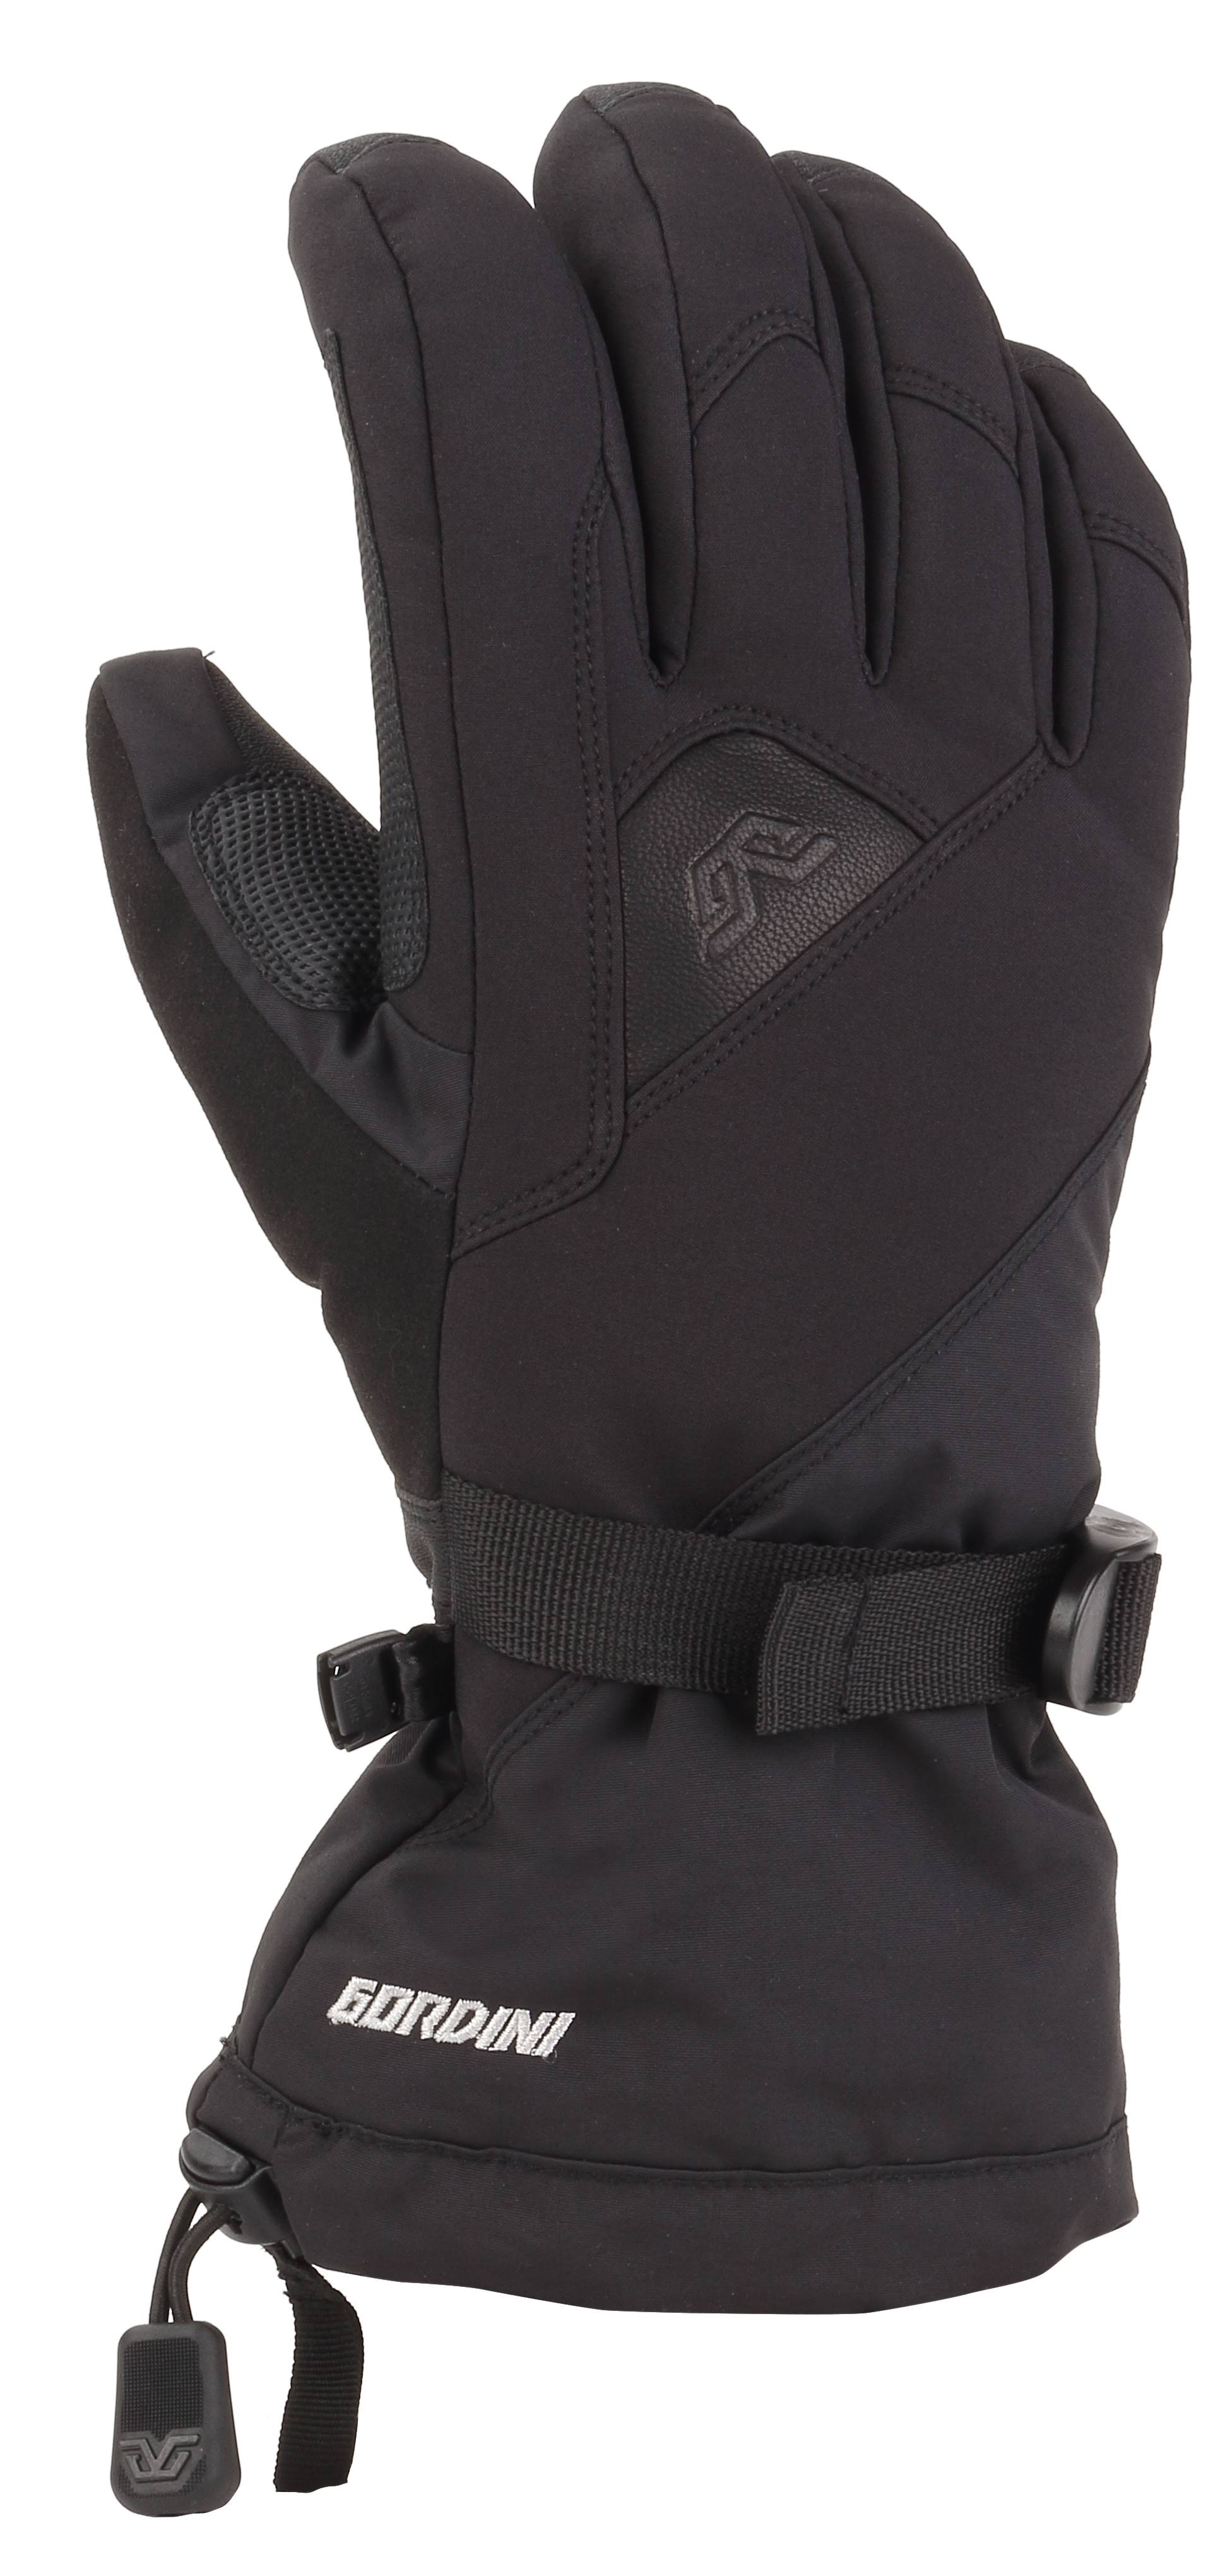 Gordini Women's Women's Aquabloc Down Gauntlet IV Waterproof Gloves